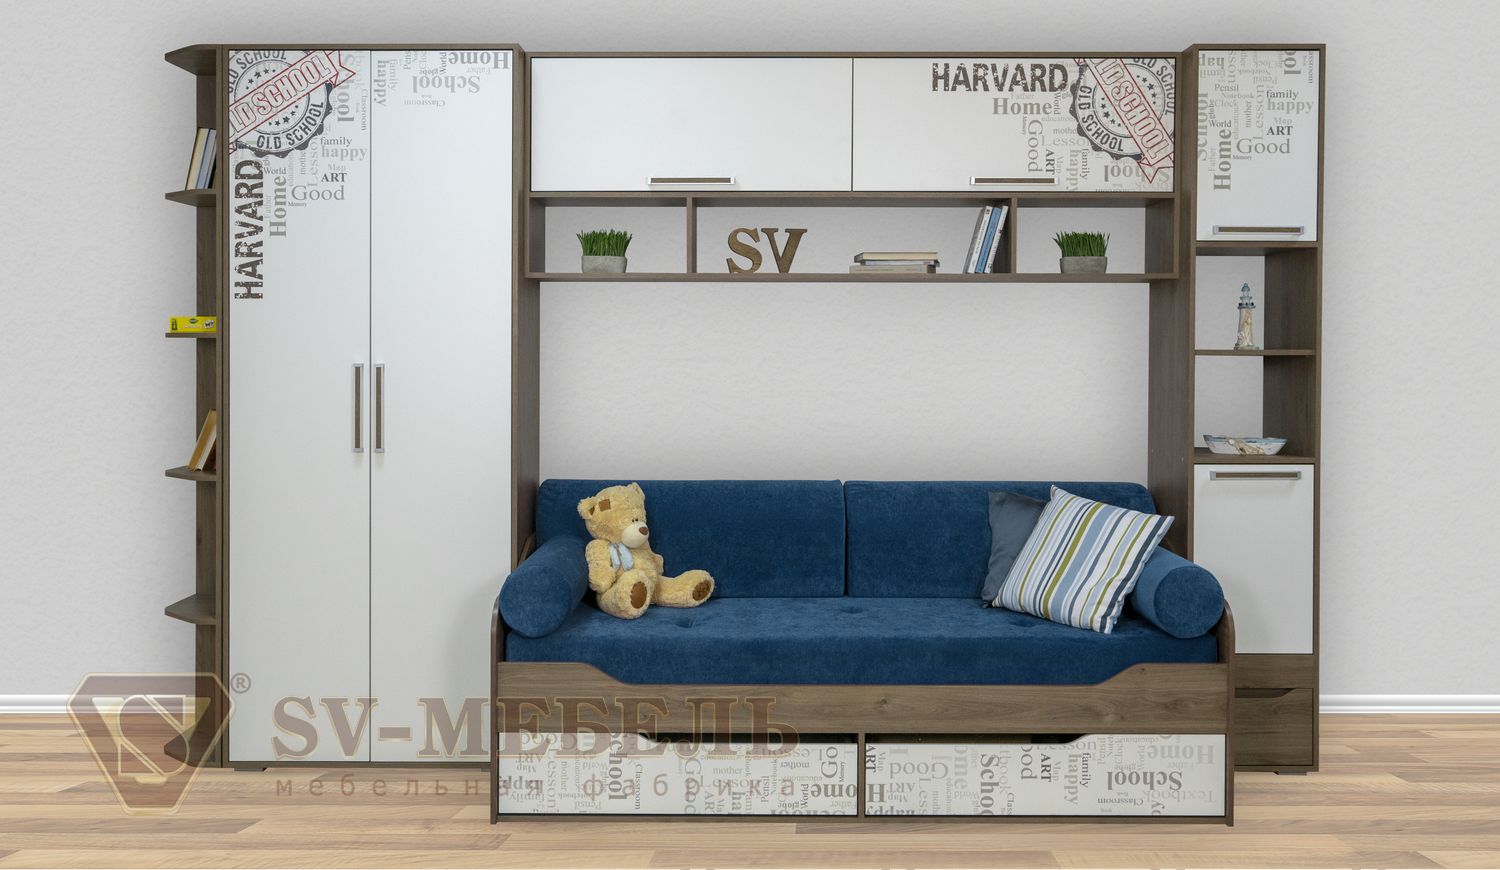 Св мс. SV мебель Гарвард детская. Шкаф Гарвард SV мебель. Модульная система Гарвард детская. Св мебель Гарвард модули.